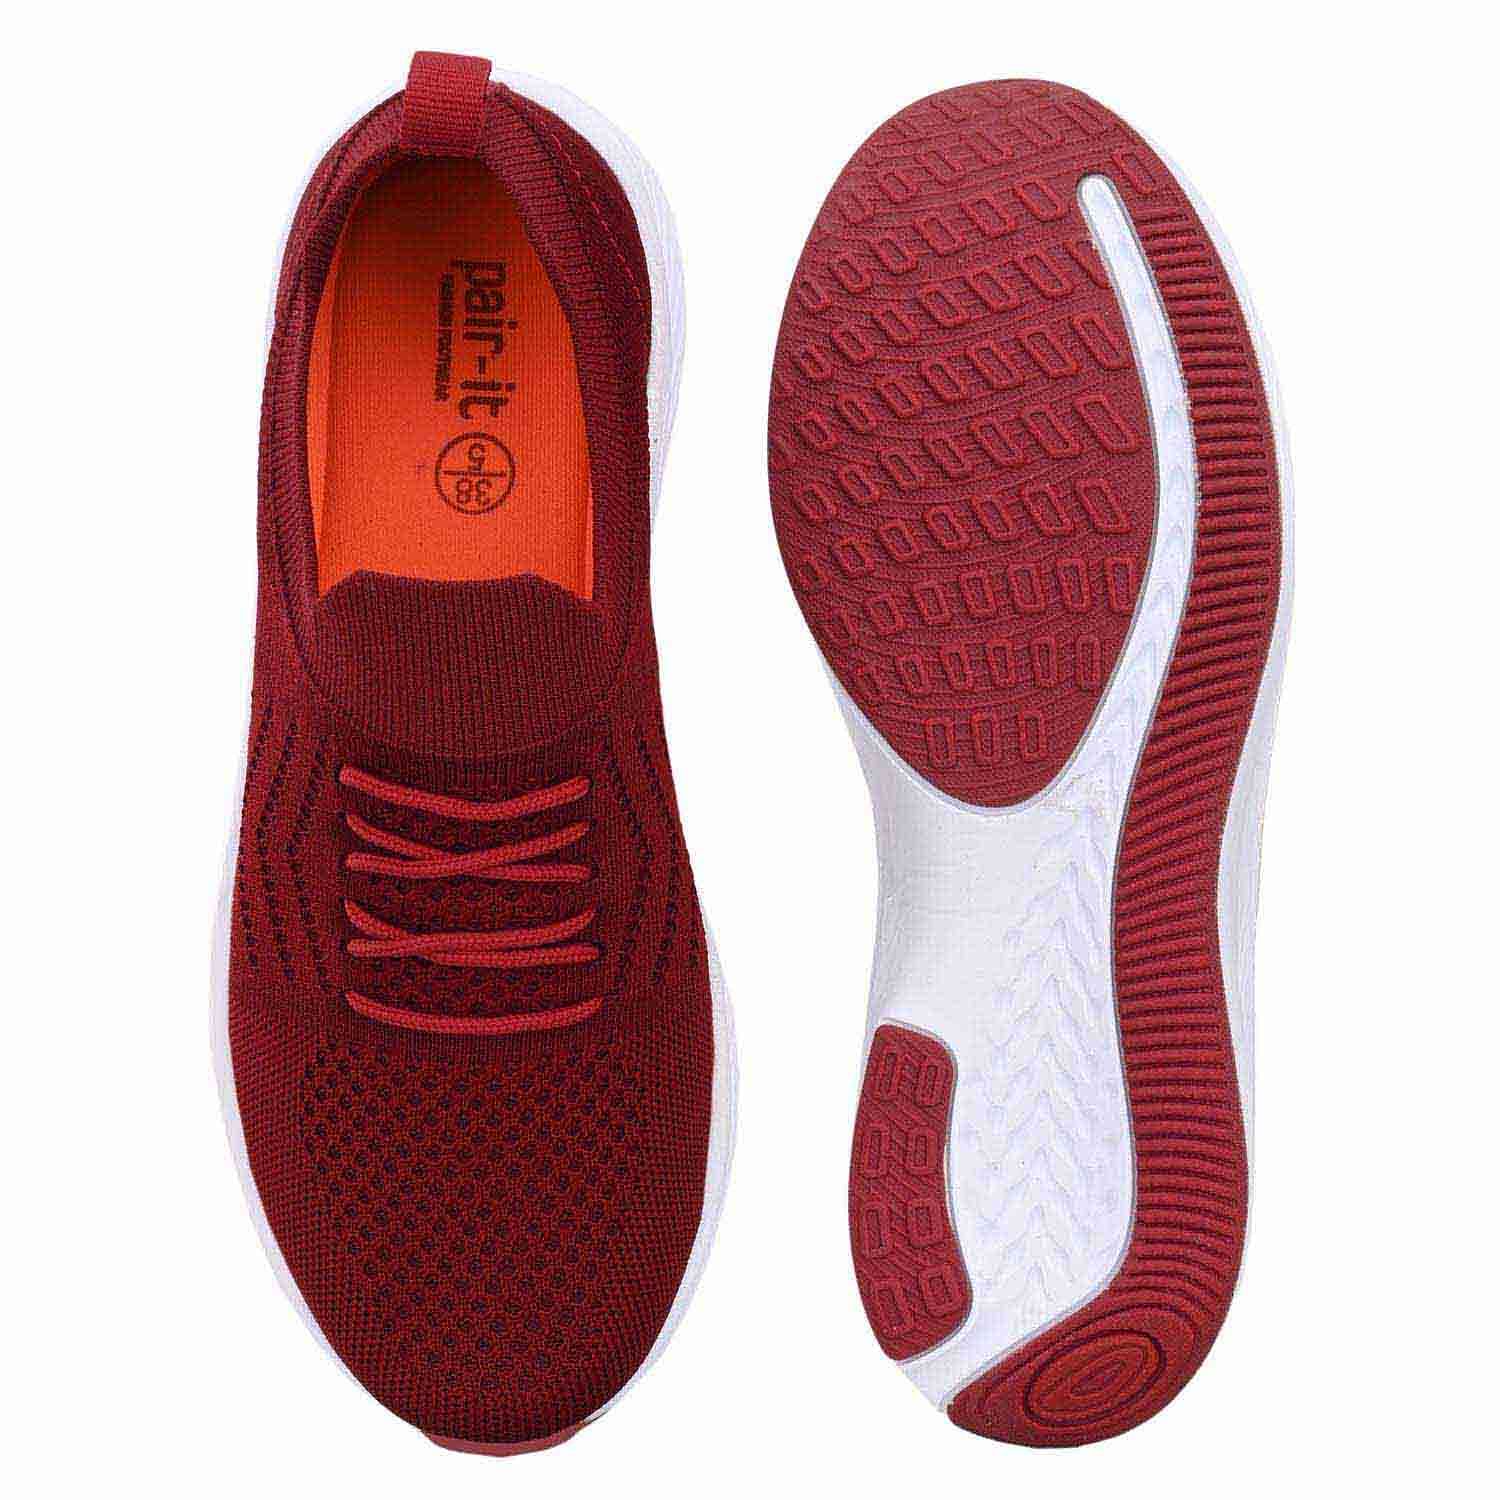 Pair-it Women's Sports Shoes-LZ-WMN SPORTS-002-Maroon